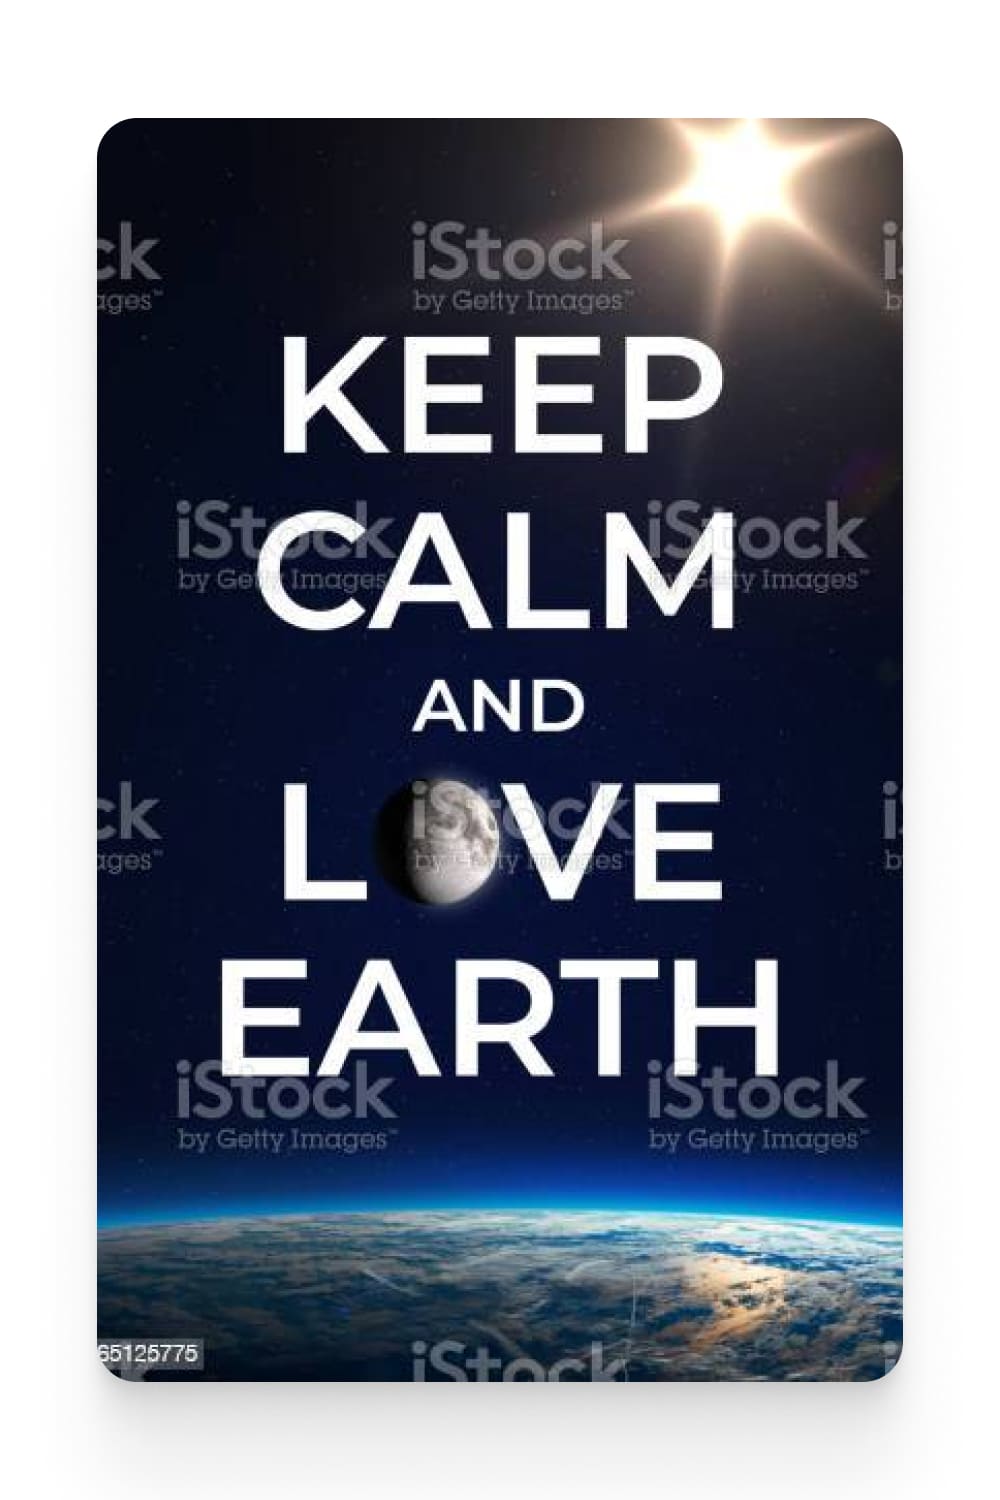 Keep calm and love Earth.